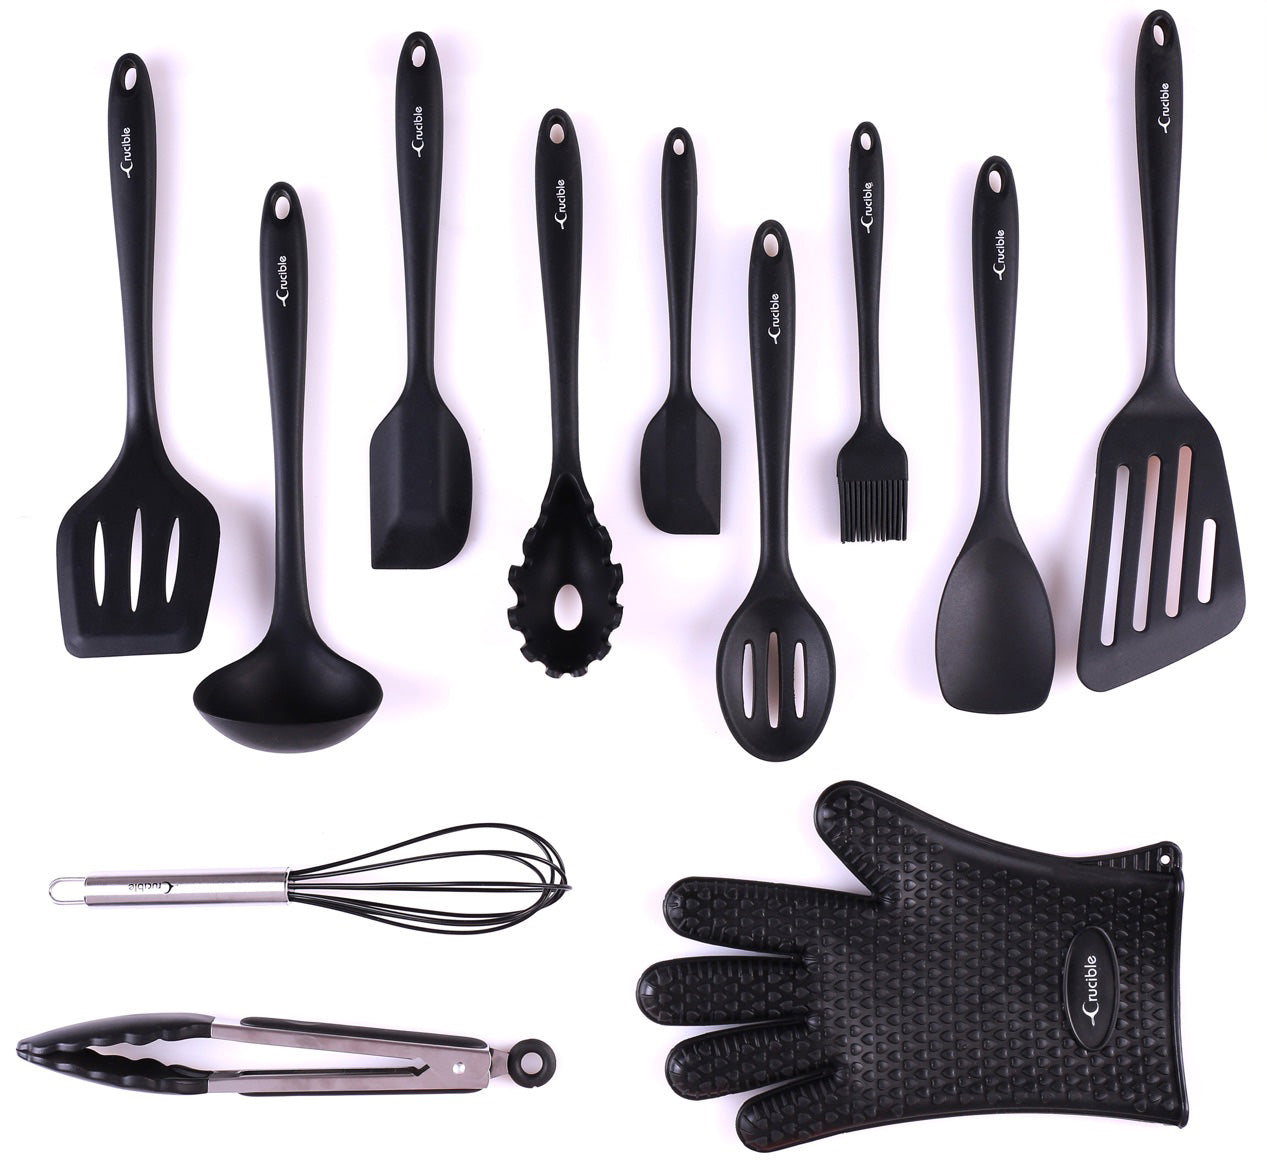 Utensils Set, 12-Piece Complete Silicone Baking & Cooking Kitchen Tools Set, Cookware Set, Kitchen Gadgets - Black - Utensilios de Cocinas